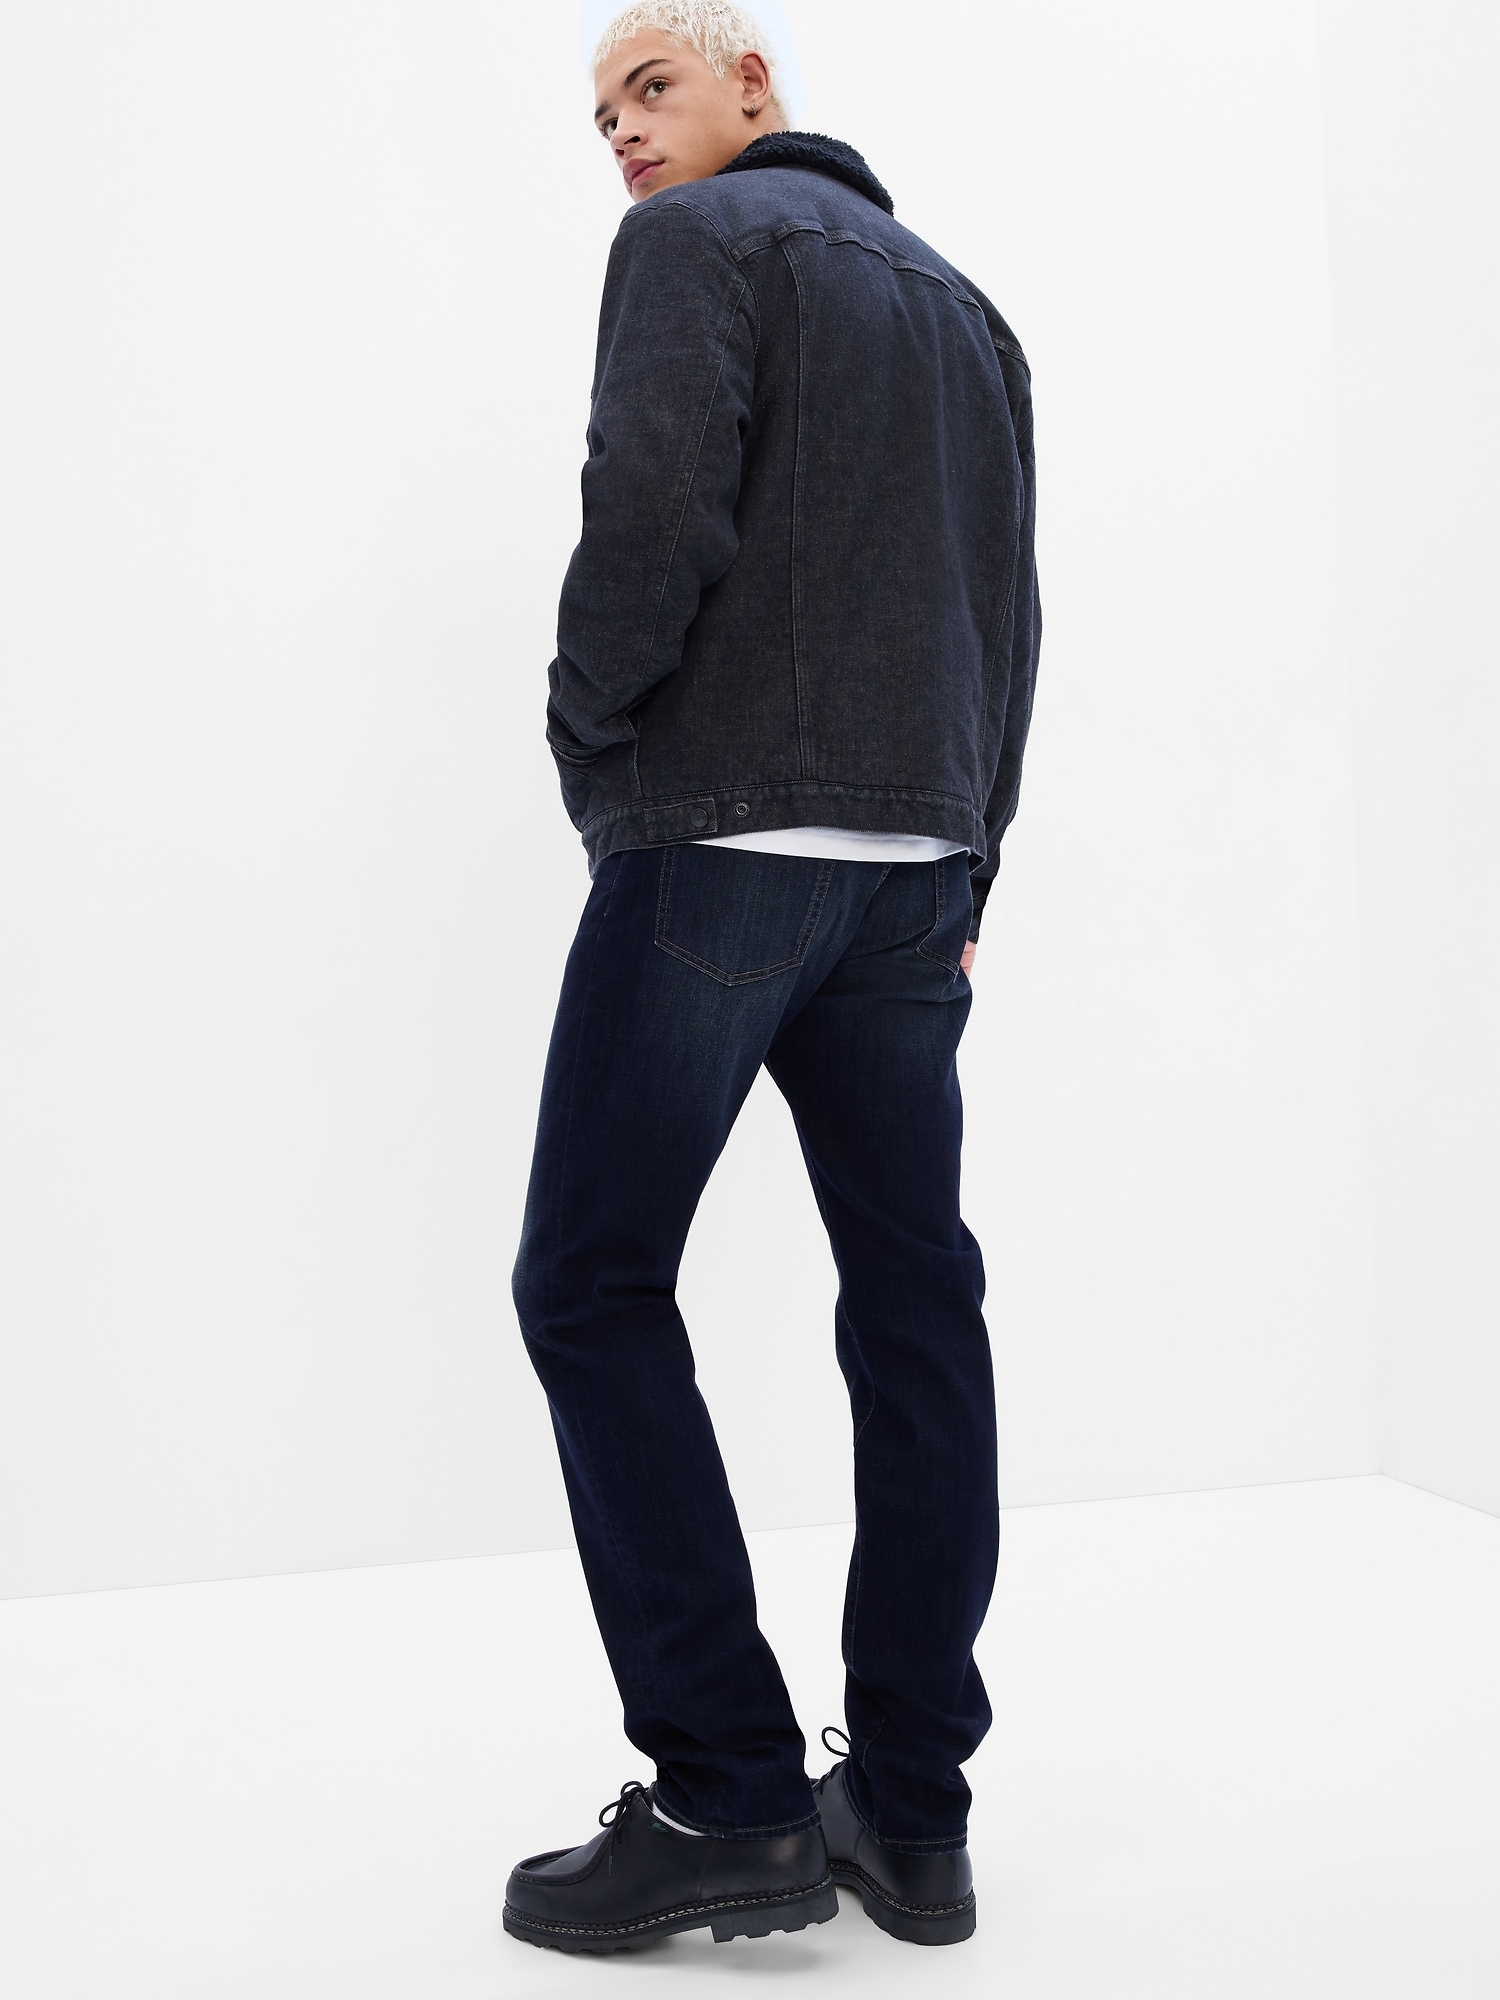 Gap Soft Wear Slim Jeans With Washwell3 - ShopStyle